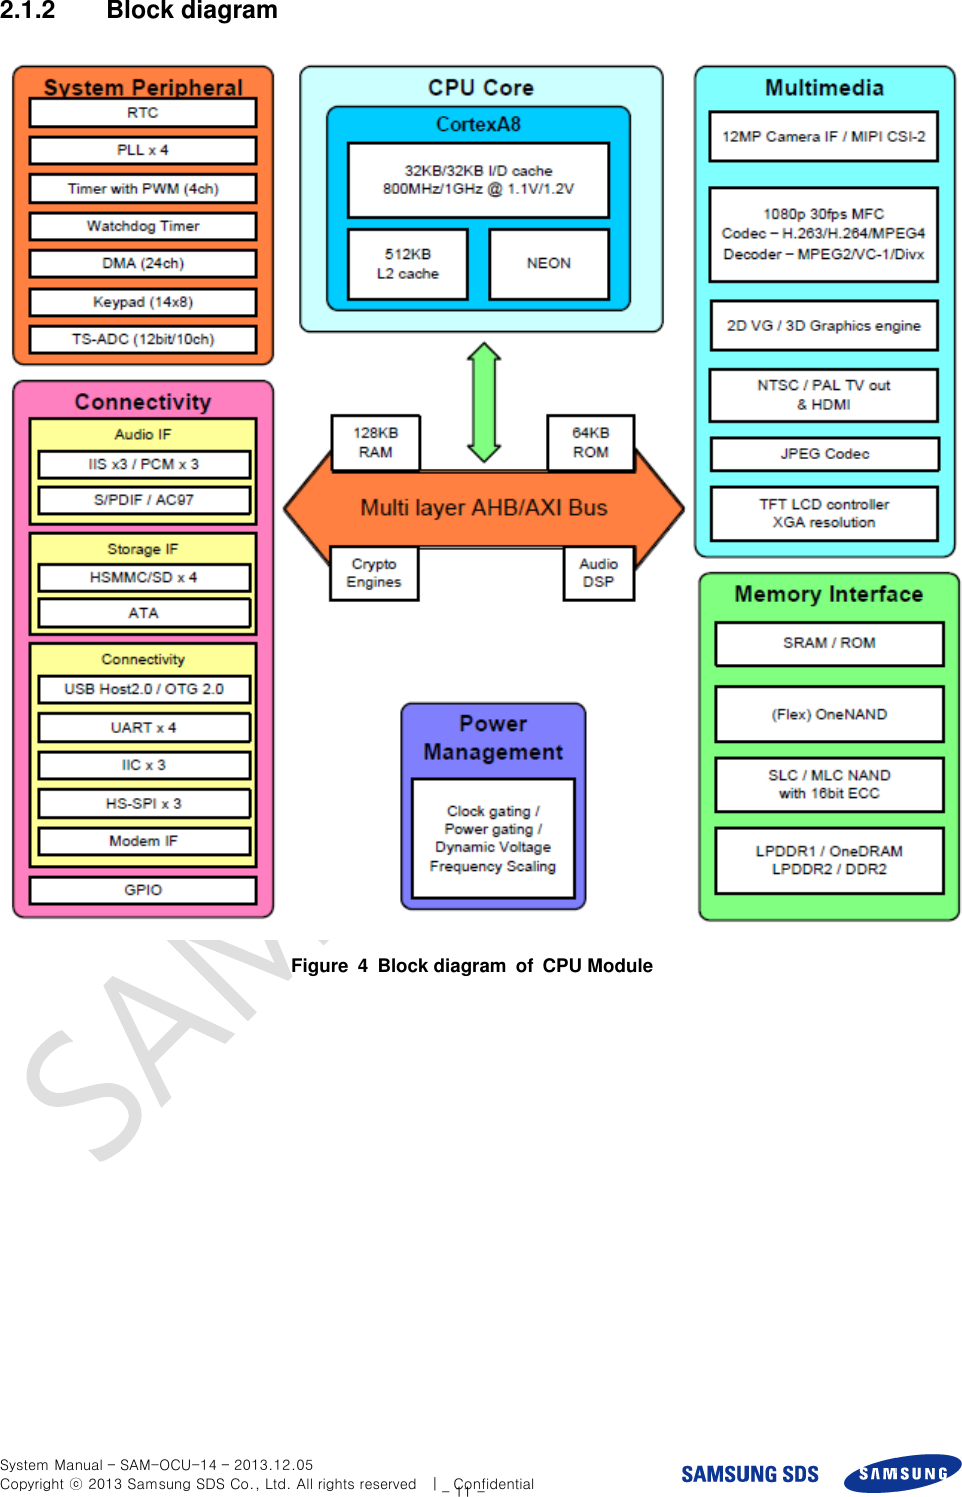  System Manual – SAM-OCU-14 – 2013.12.05 Copyright ⓒ 2013 Samsung SDS Co., Ltd. All rights reserved    |    Confidential - 11 - 2.1.2  Block diagram  Figure  4  Block diagram  of  CPU Module  